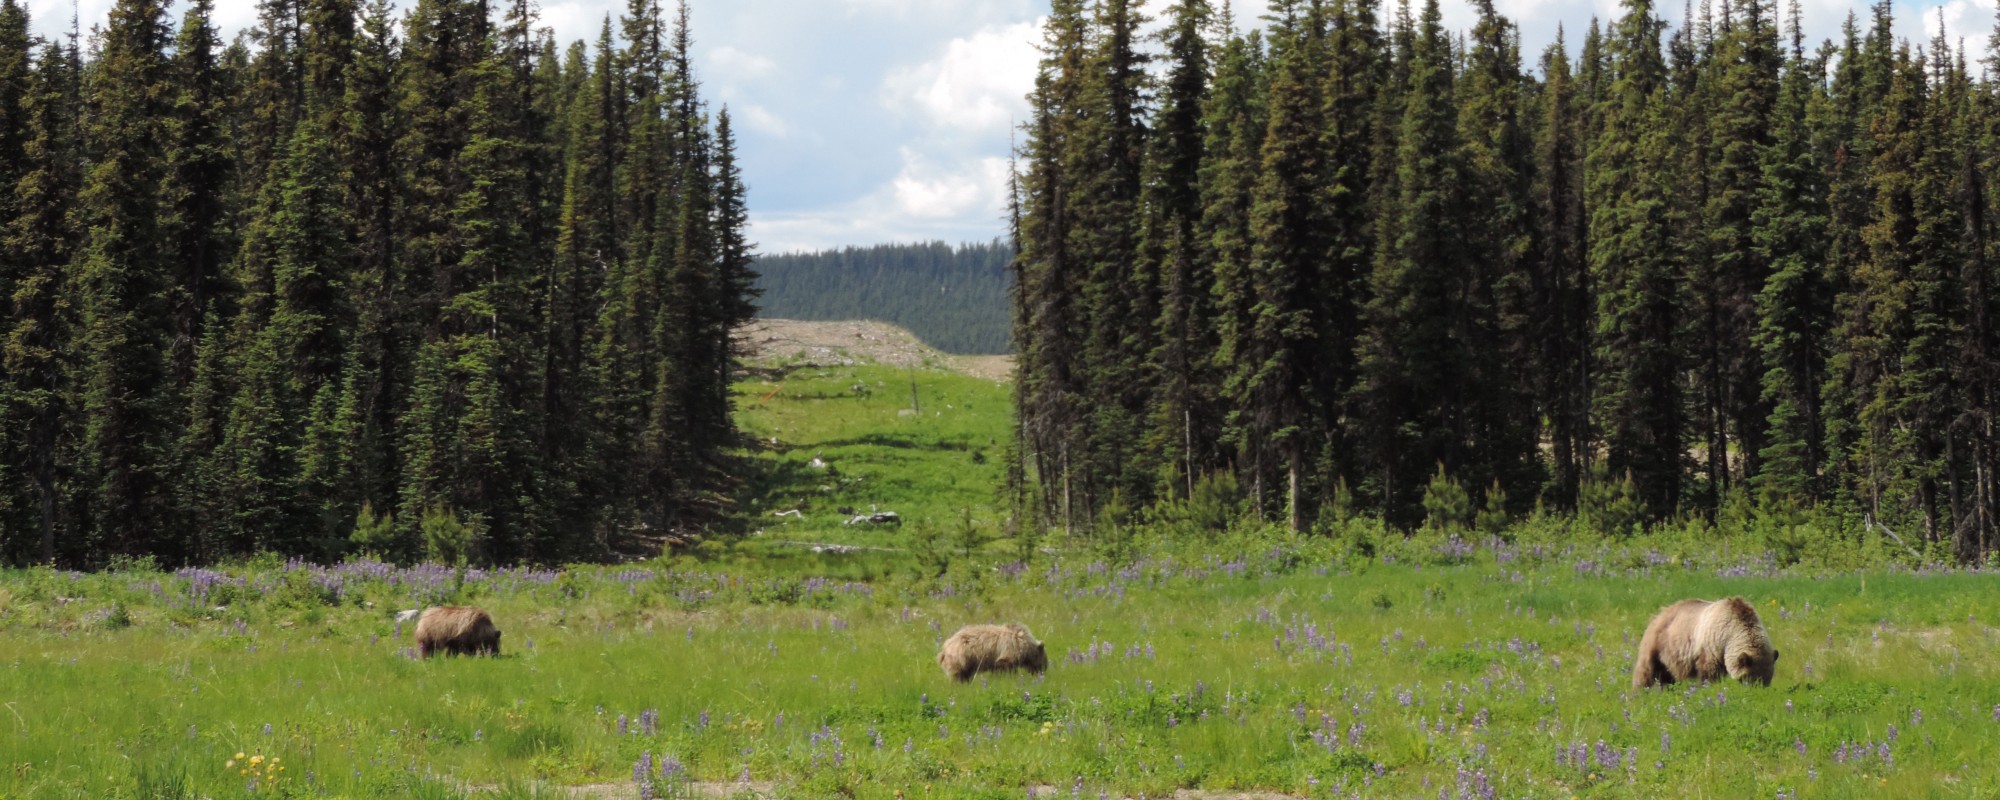 grizzly bears in a meadow near a cutblock